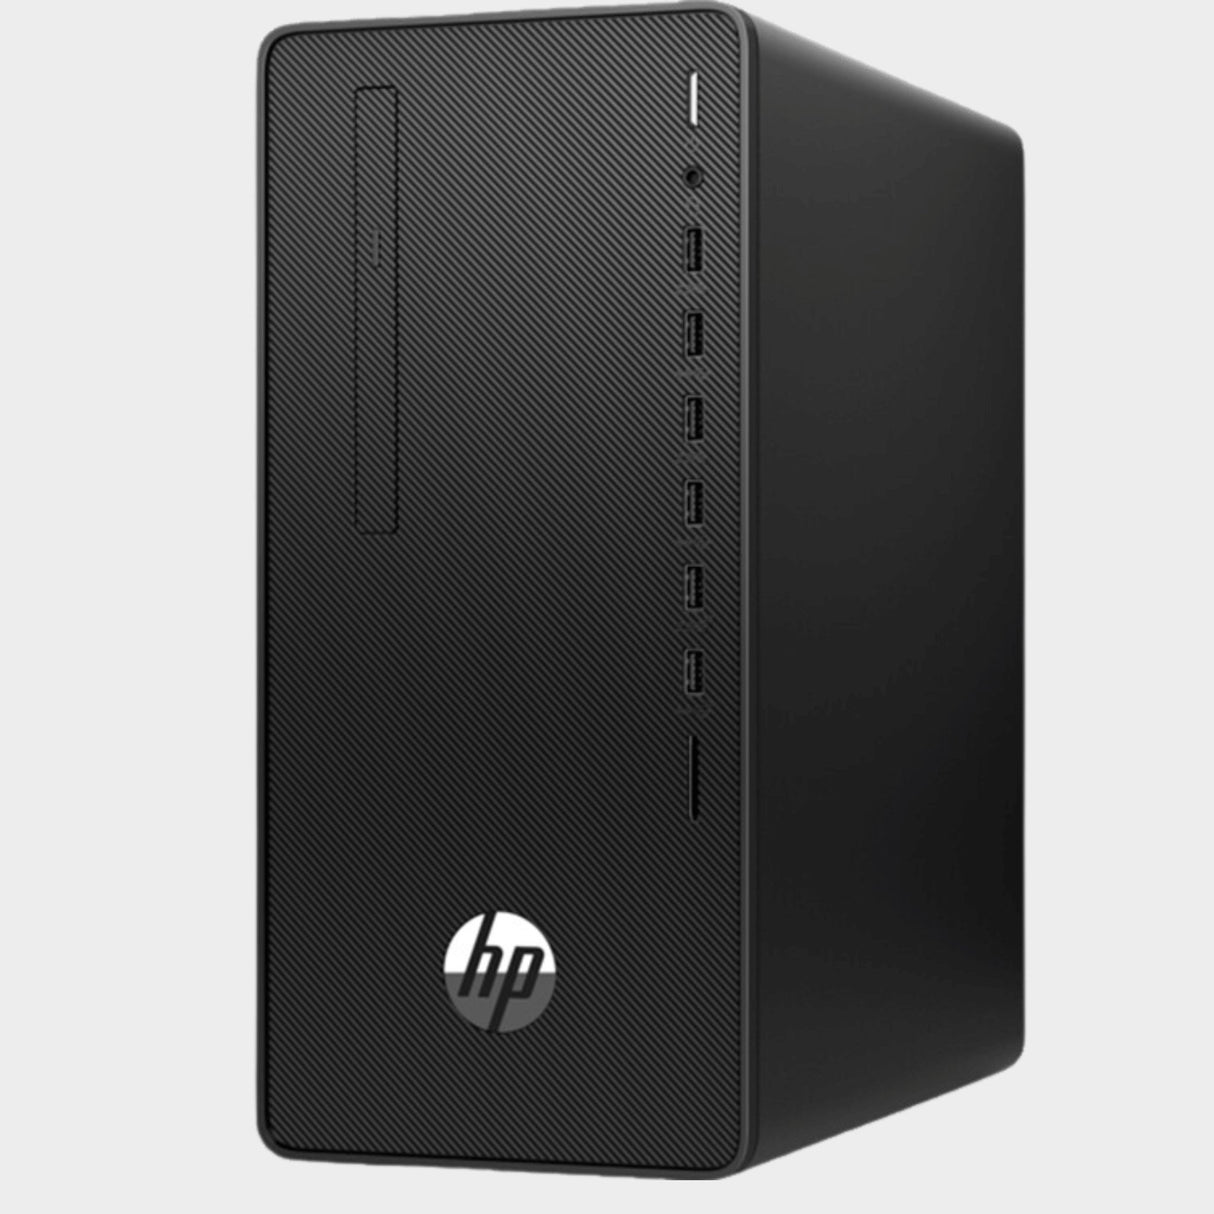 HP 290 G4 Desktop Computer, Intel Core i5, 8GB RAM, 1TB HDD - KWT Tech Mart